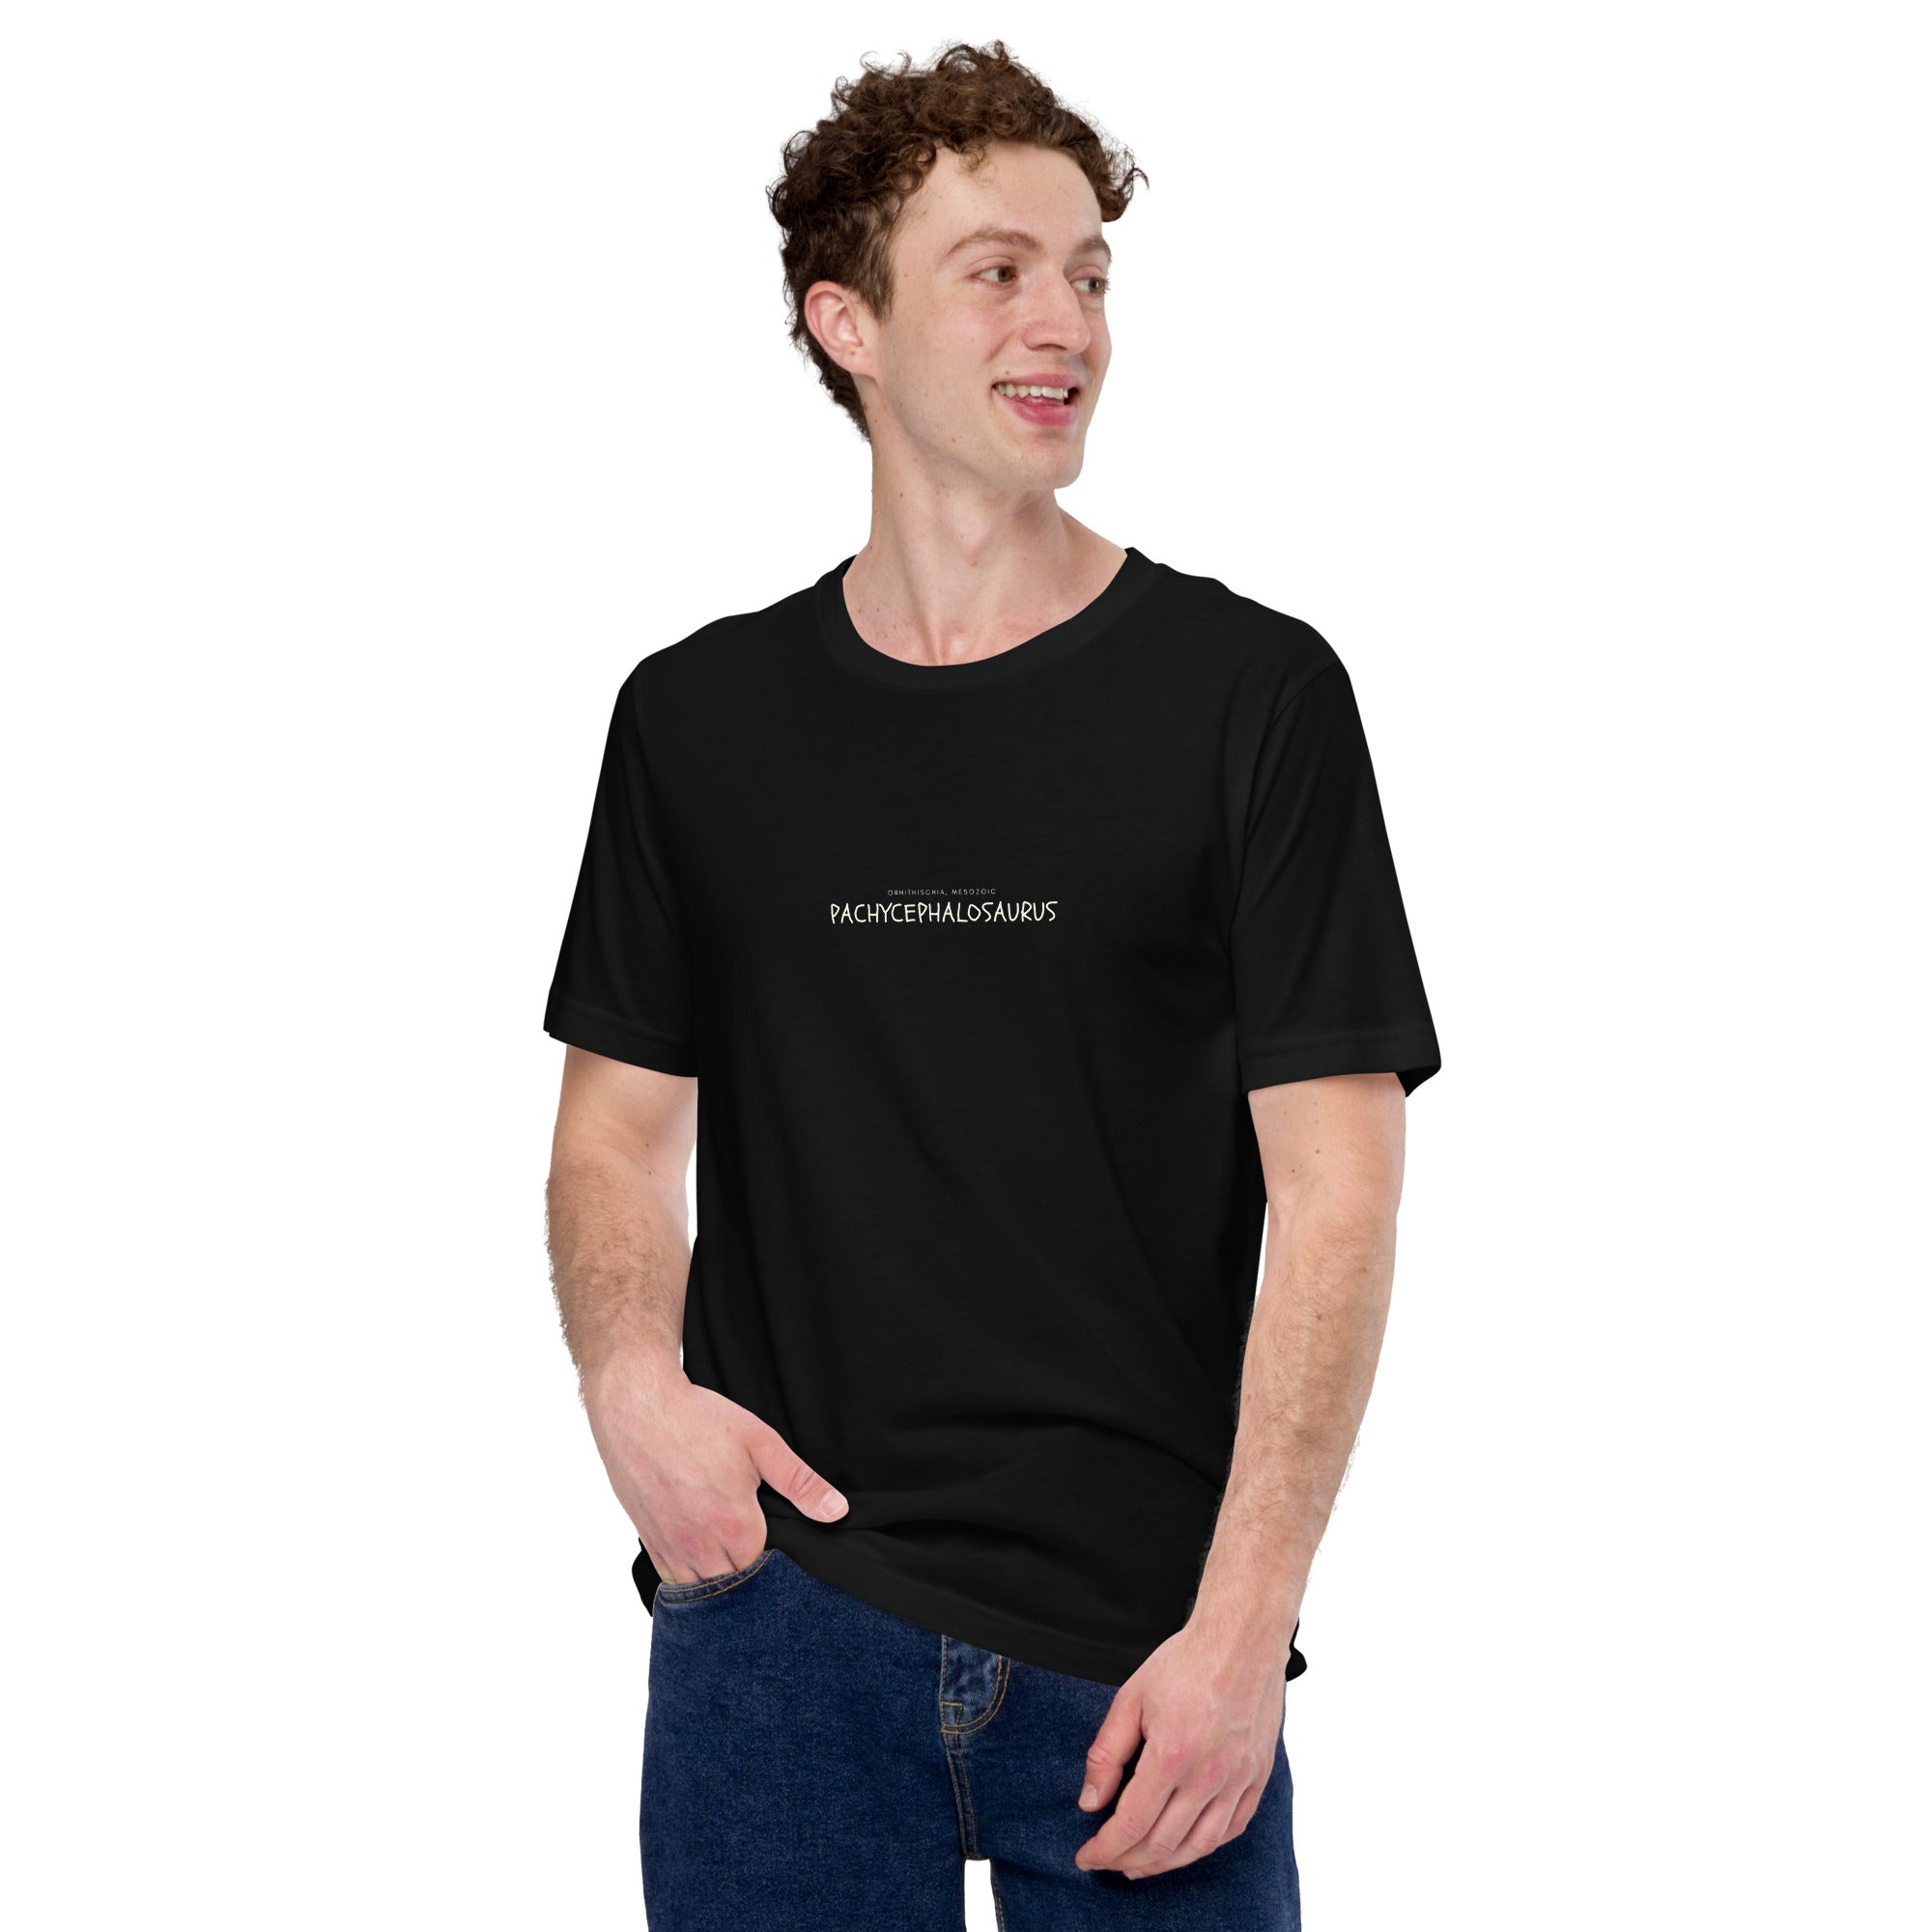 Camiseta unisex con texto "Pachycephalosaurus"